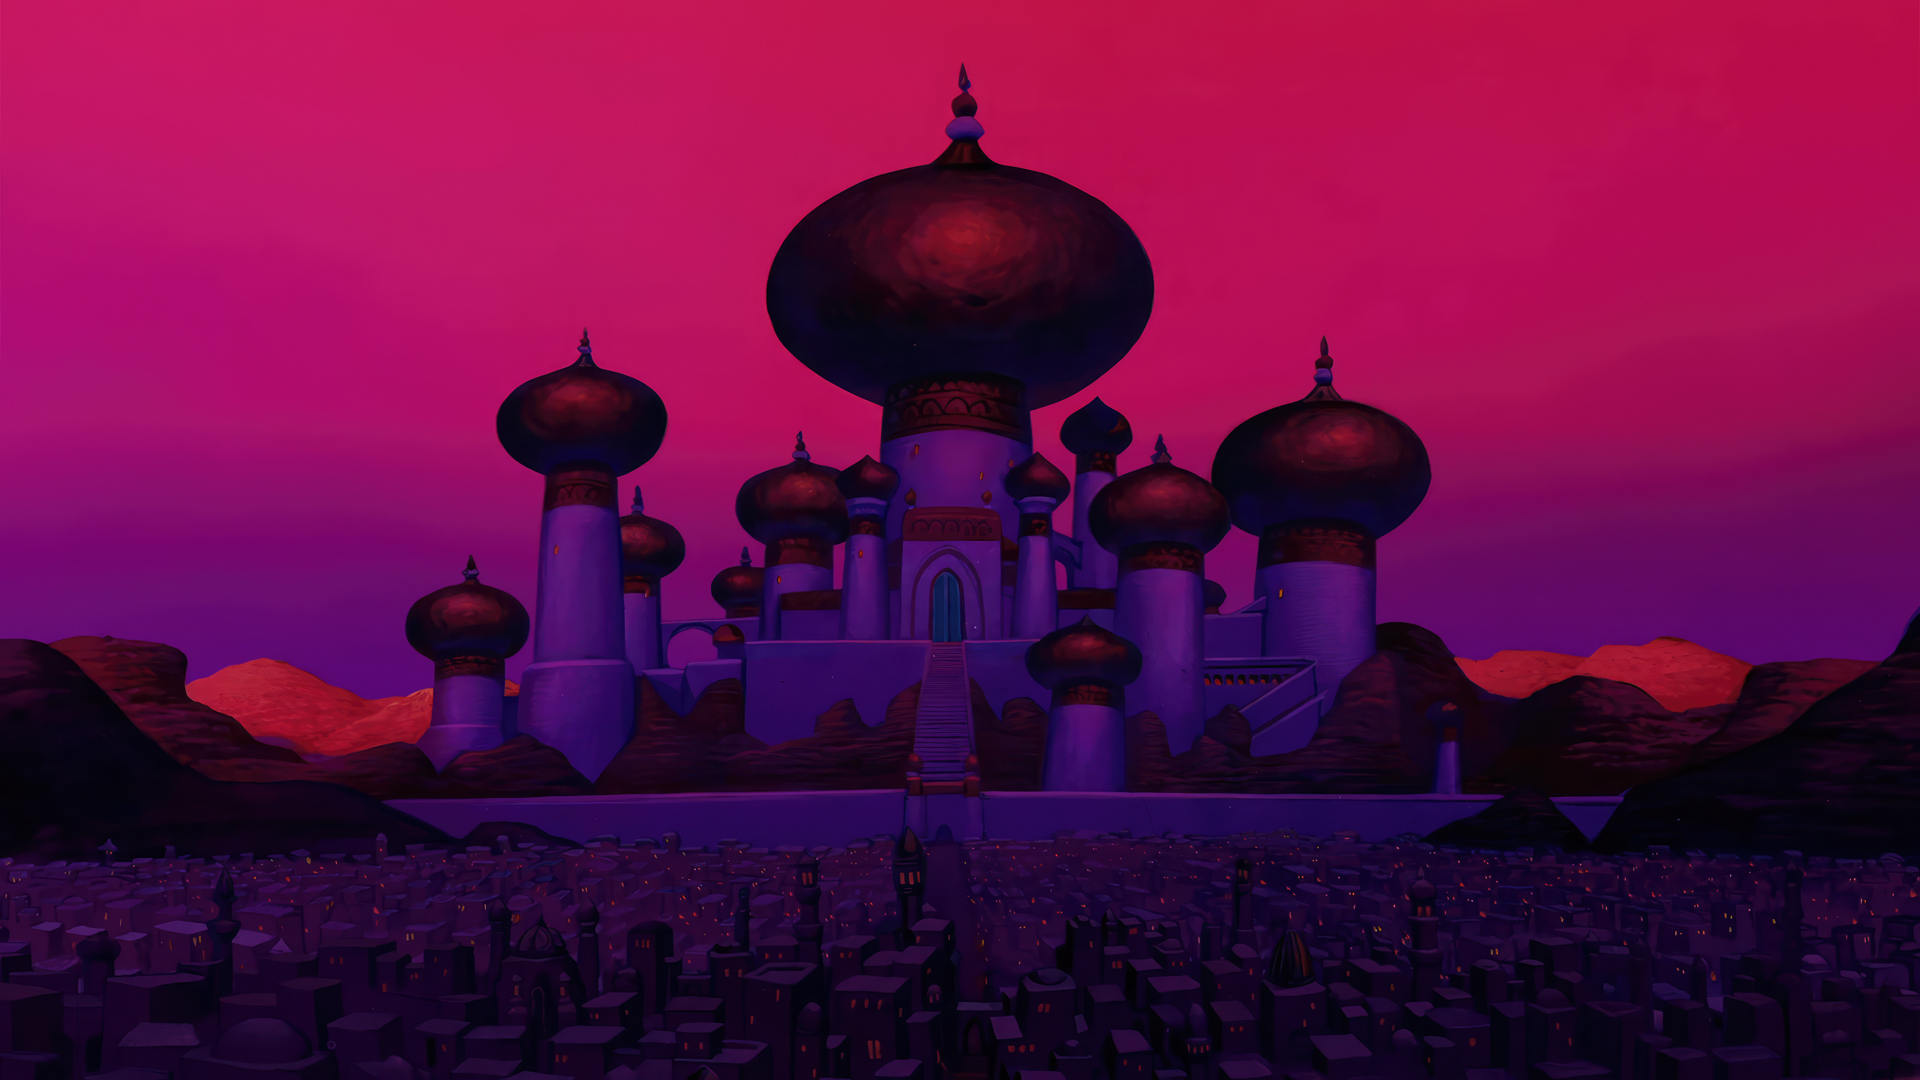 Aladdin Animation Animated Movies Film Stills Disney Walt Disney Agrabah The Sultans Palace City Cit 1920x1080